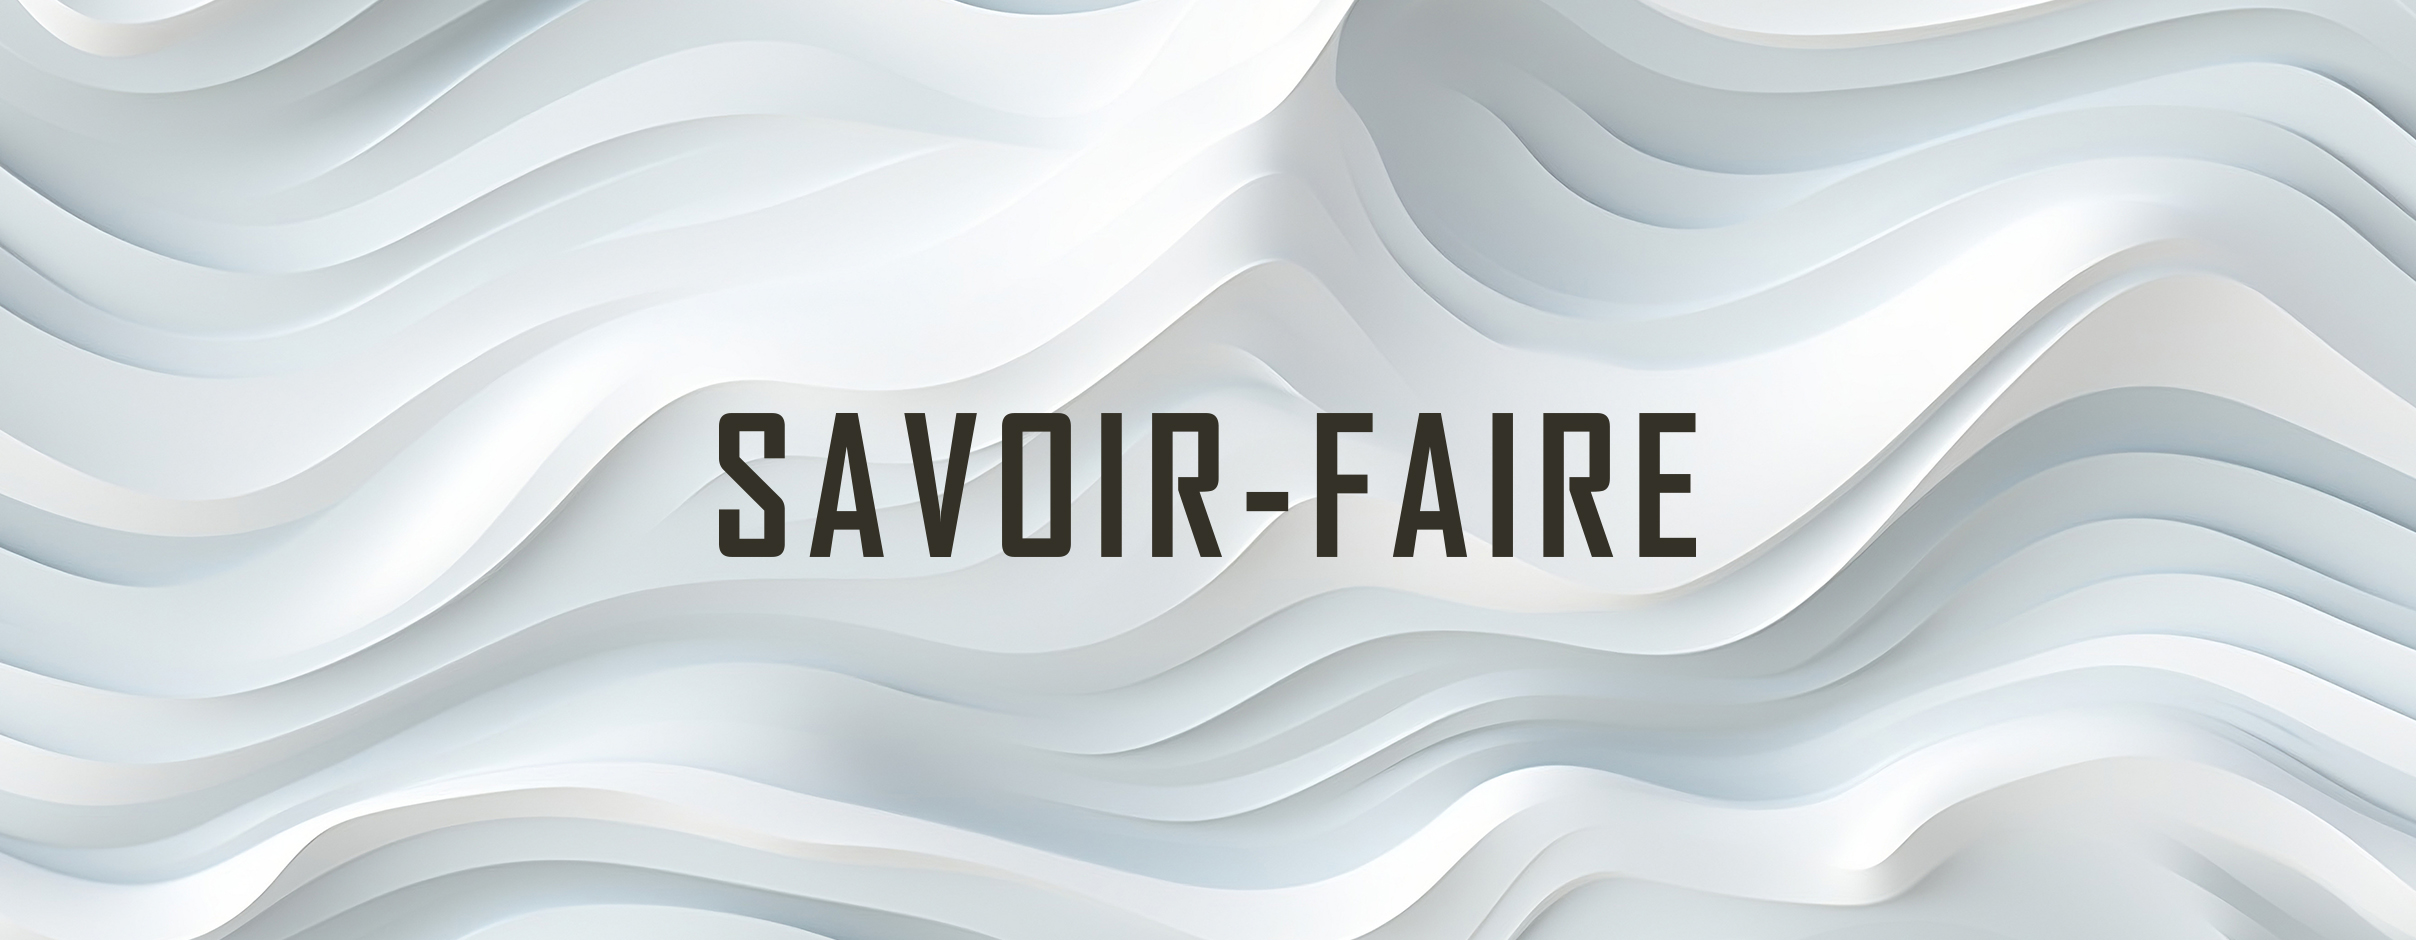 Savoir-Faireon wording on a wavy white background